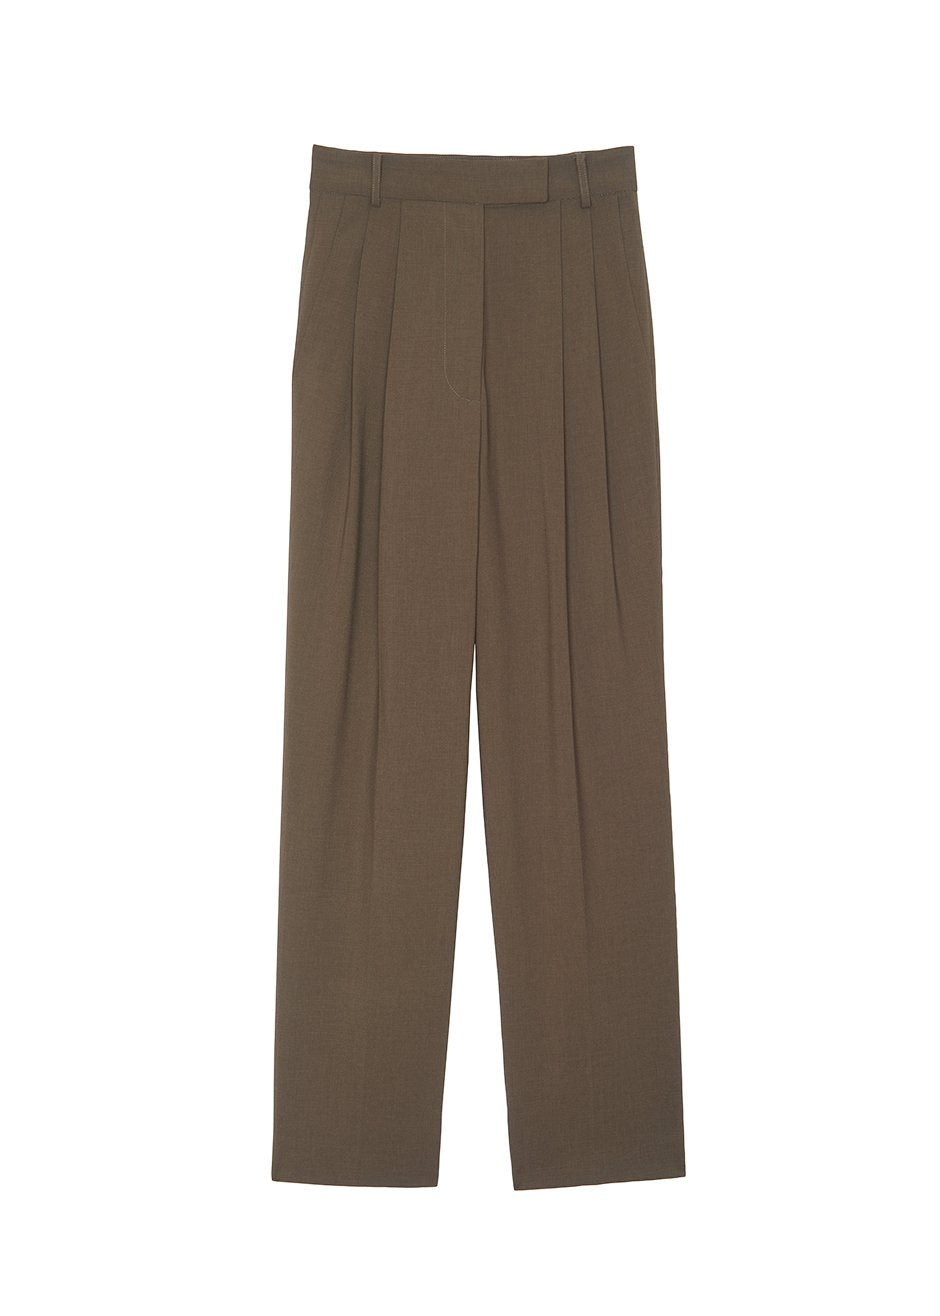 Bea Suit Pants - Chocolate - 10